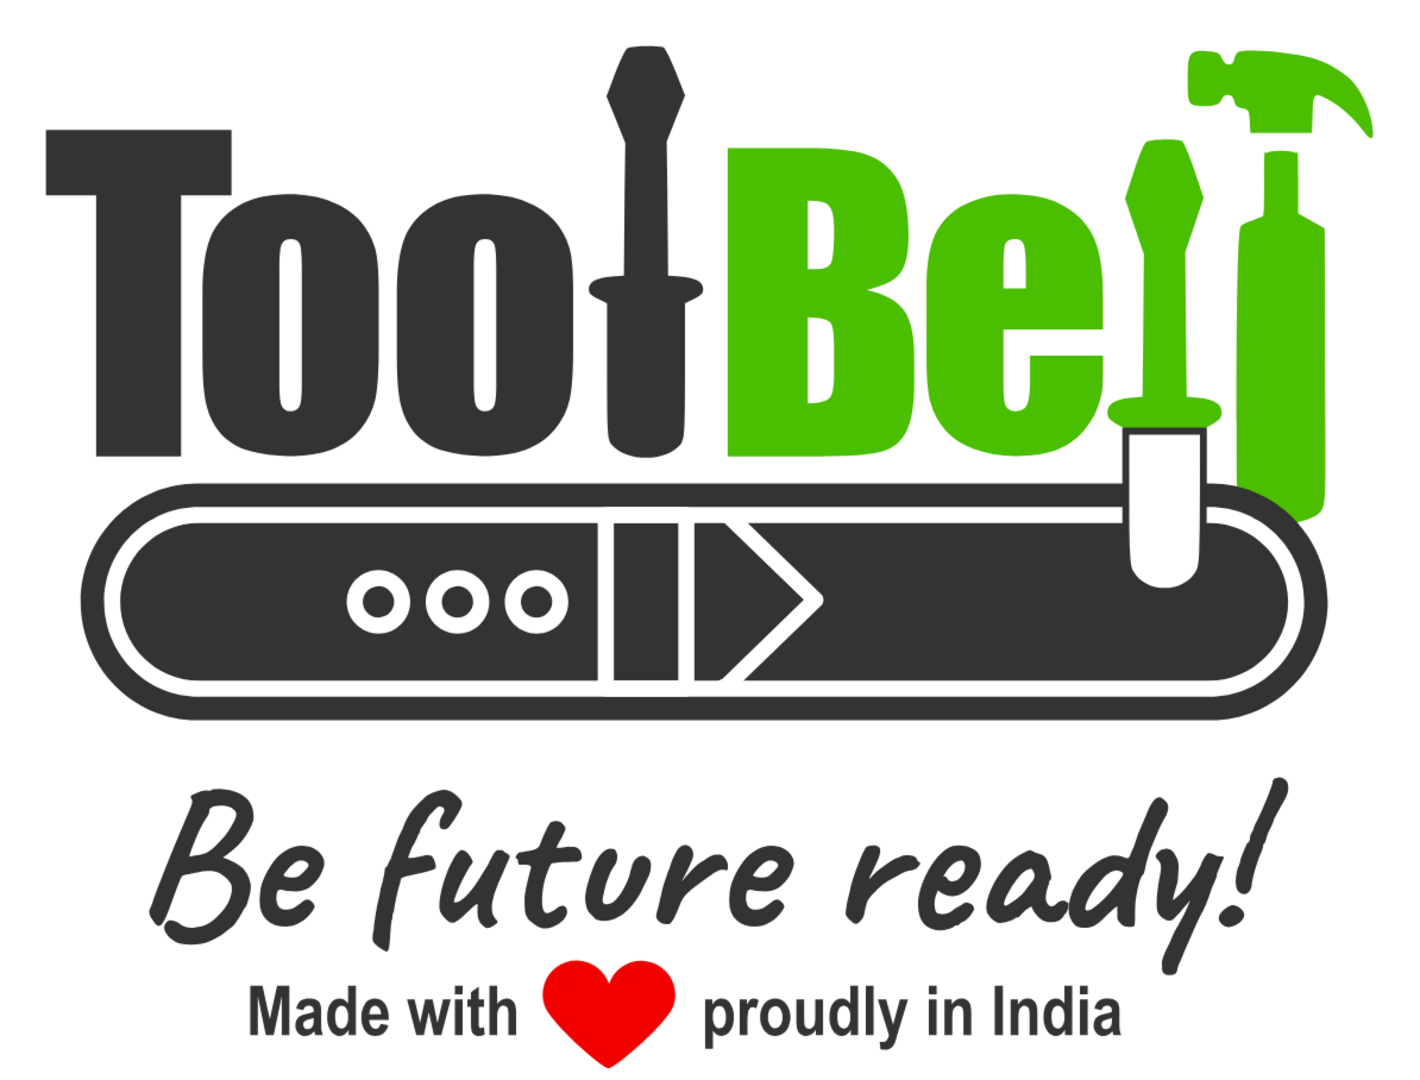 toolbelt logo tagline.png